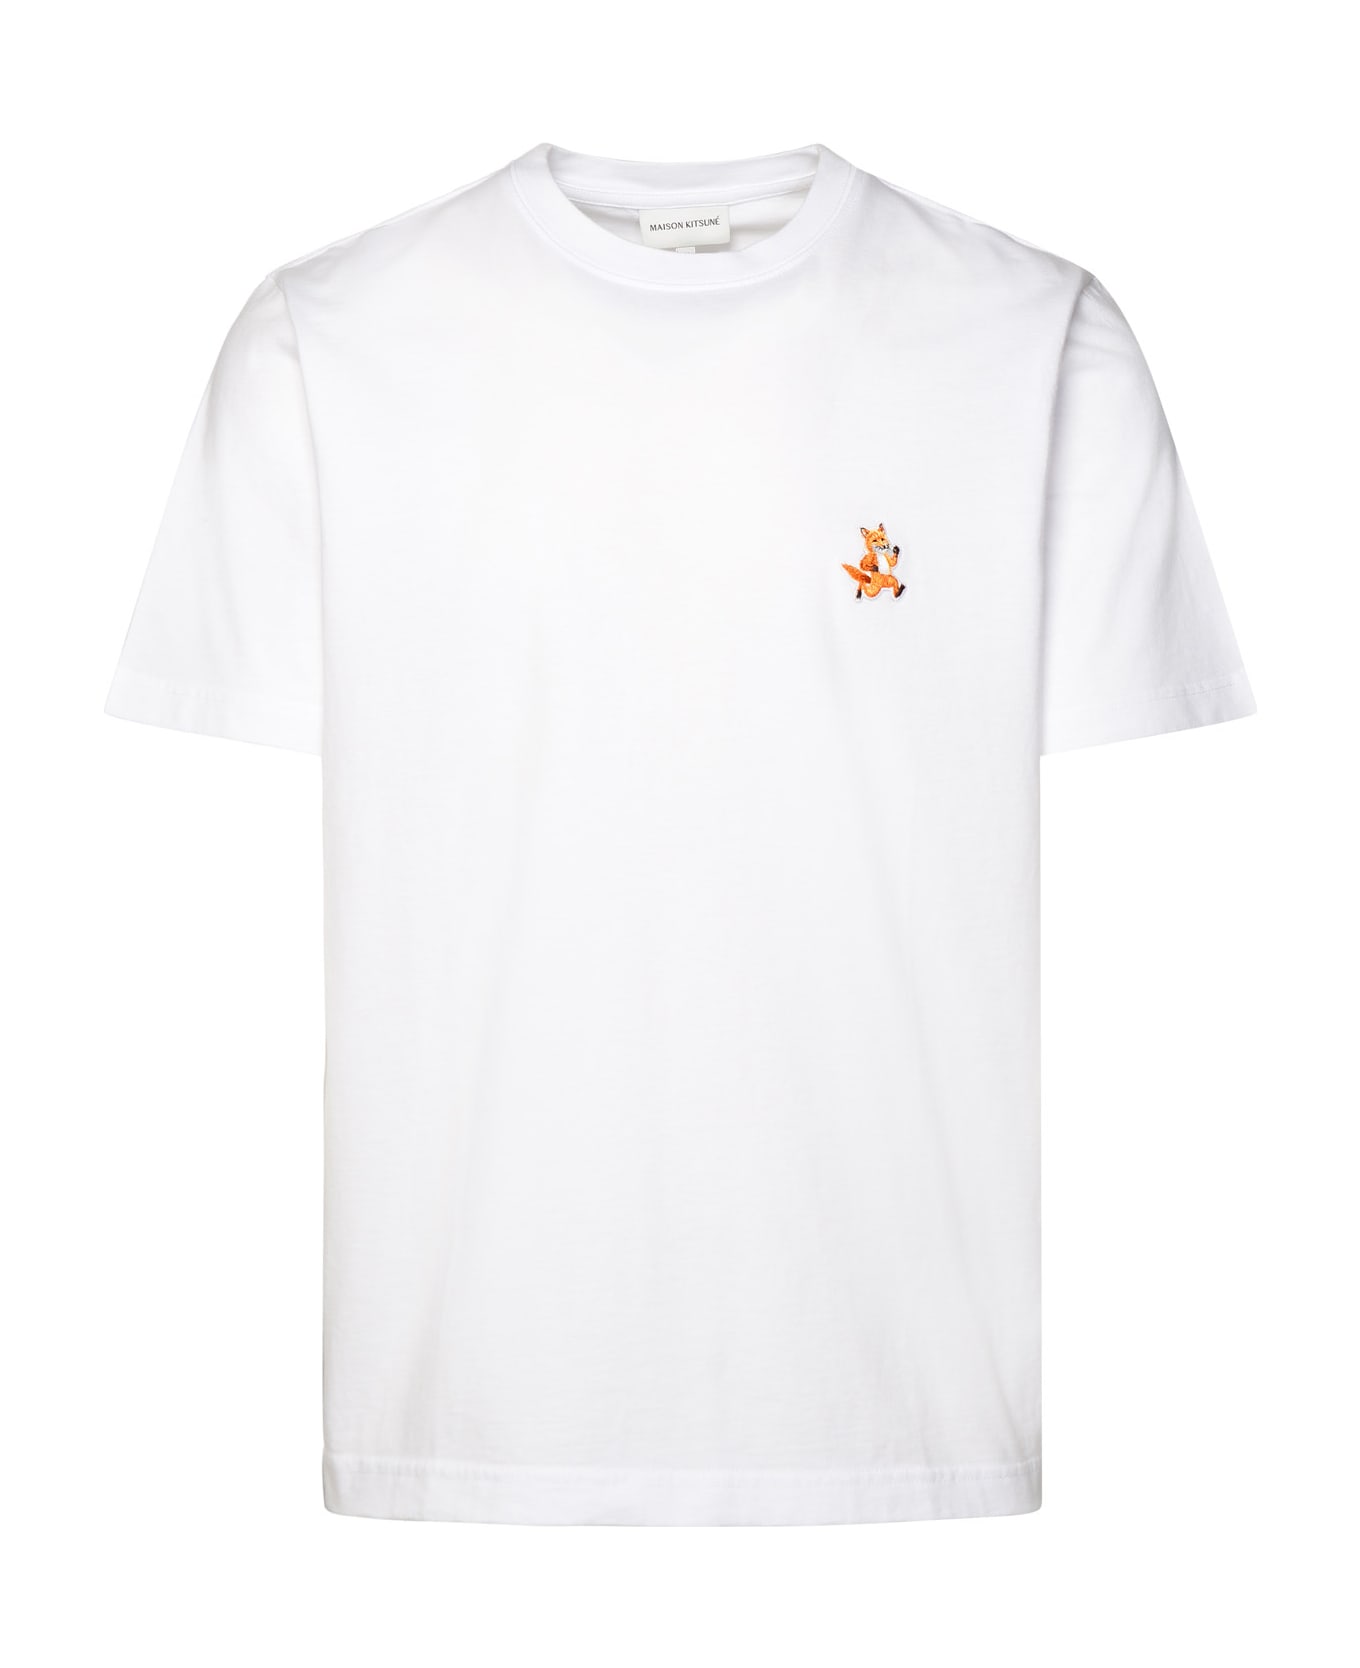 Maison Kitsuné White Cotton T-shirt - Nero